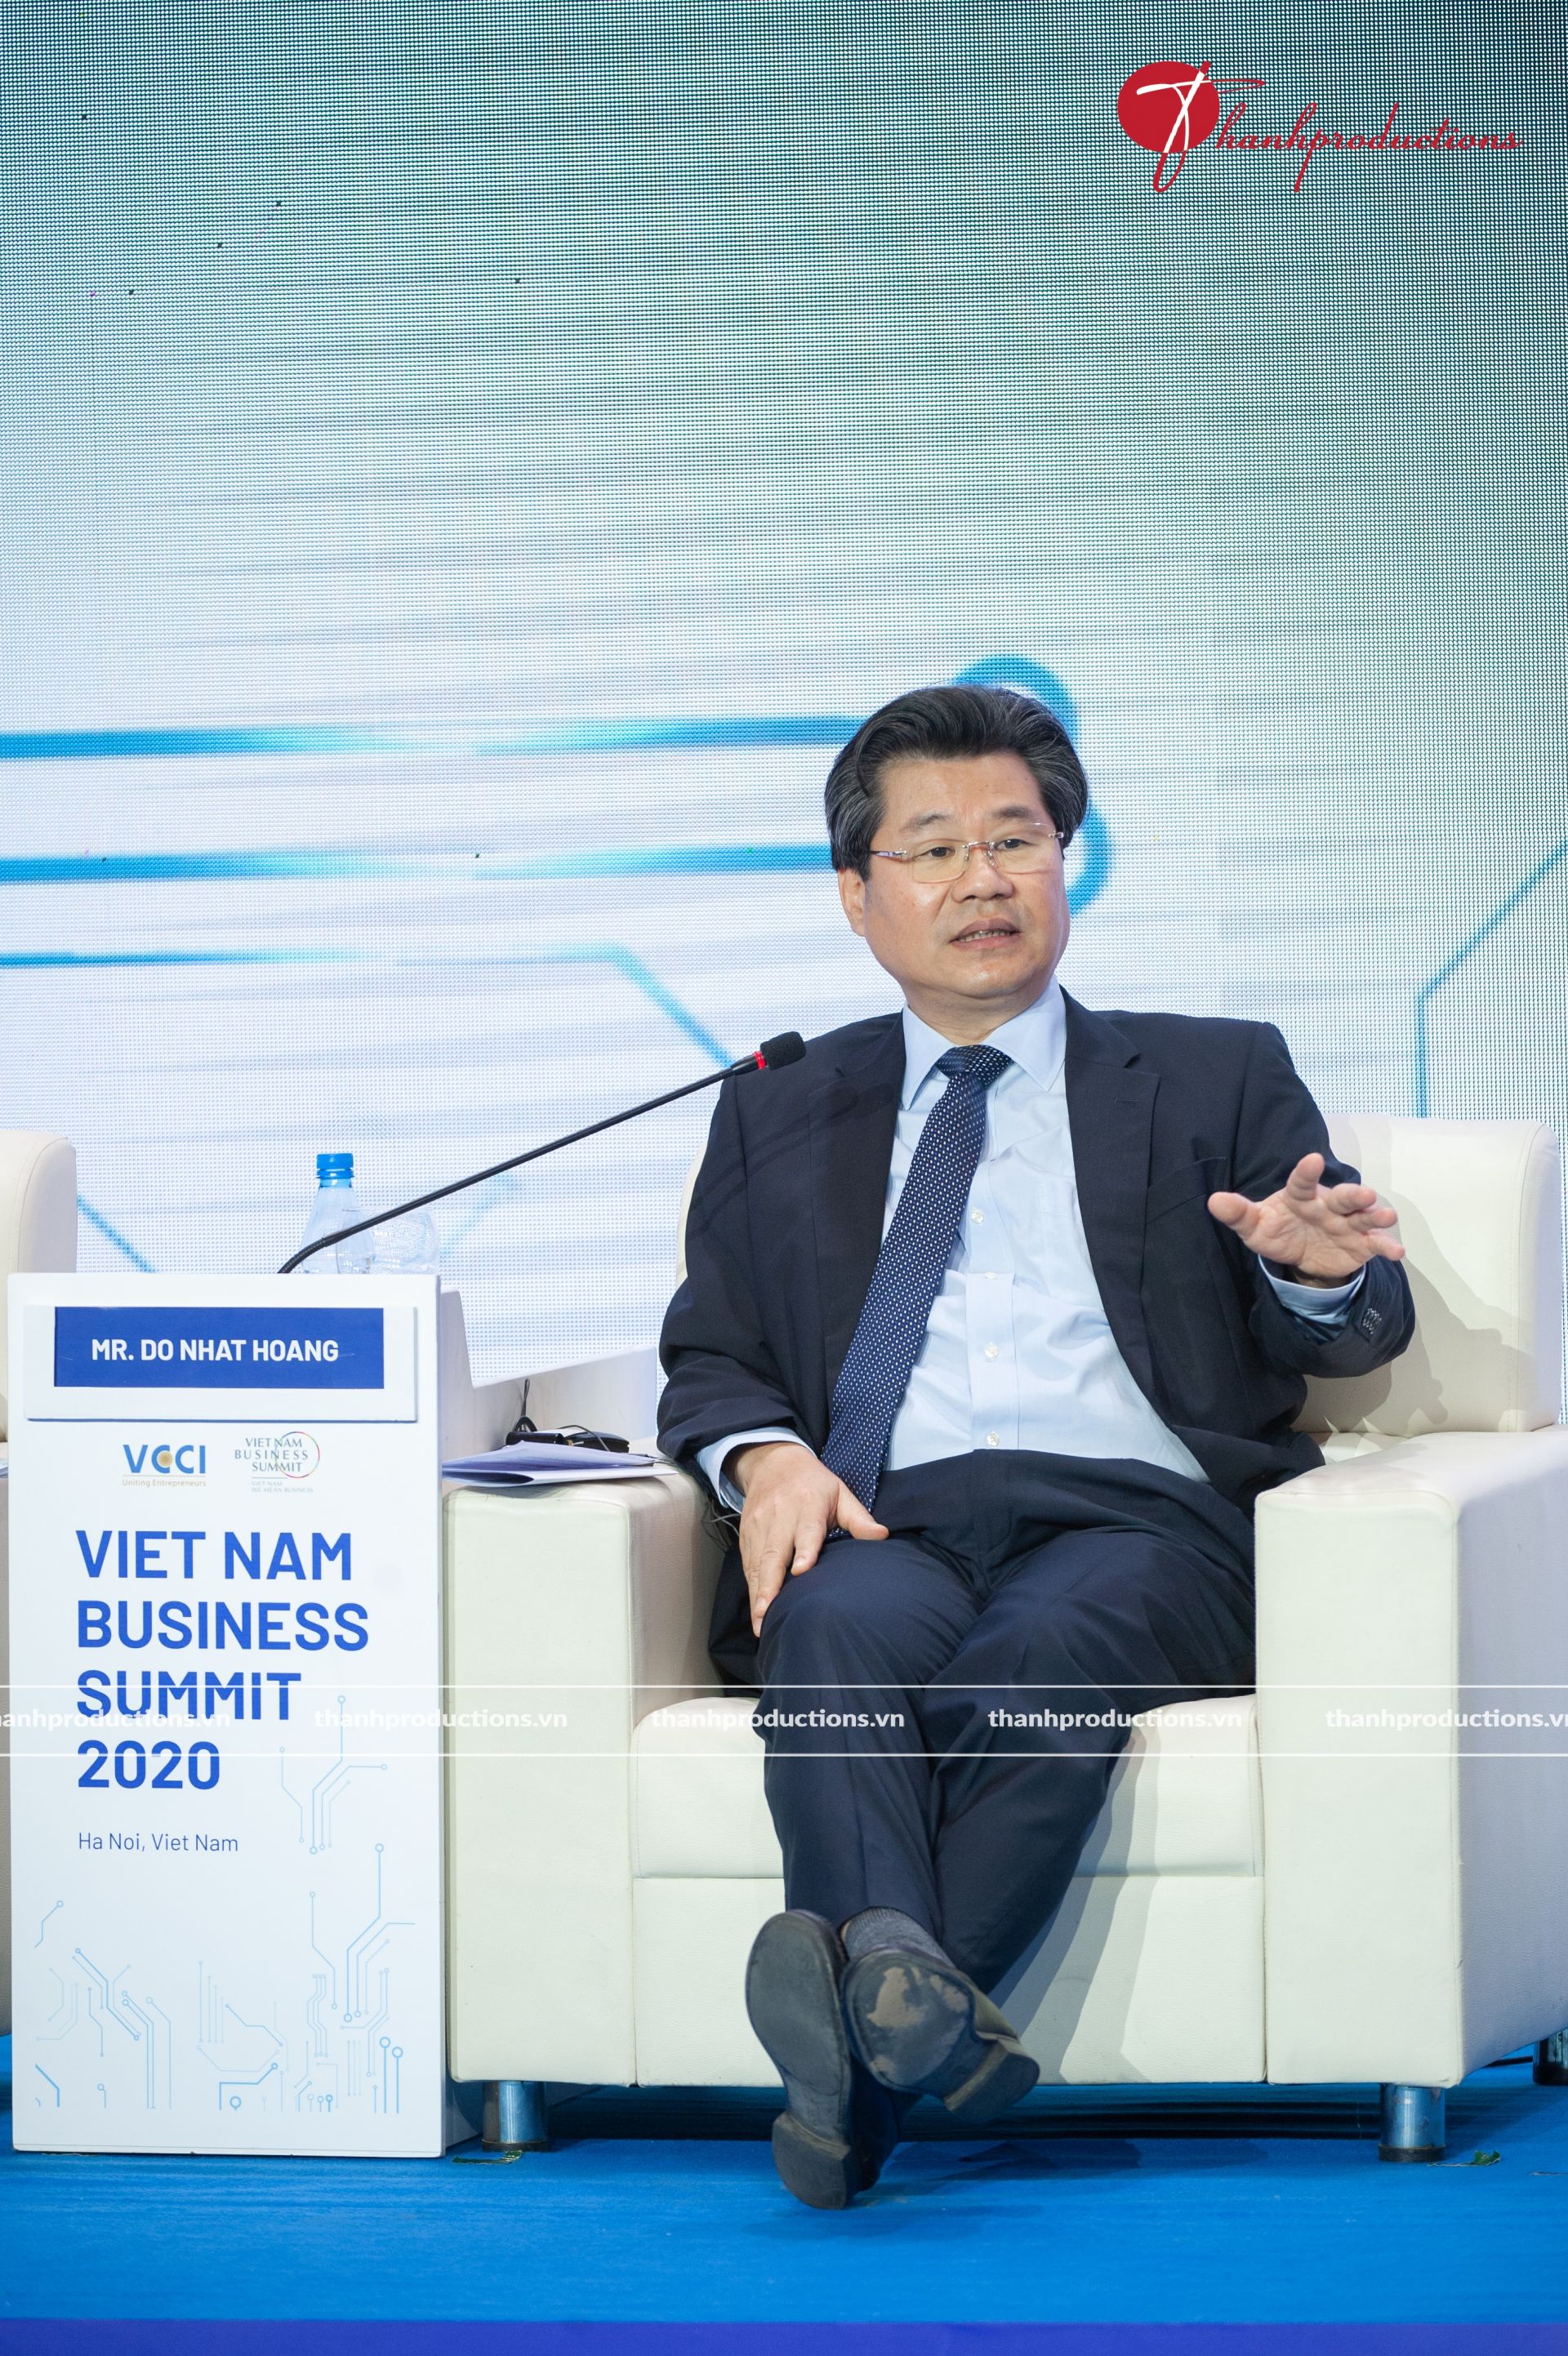 VIETNAM BUSINESS SUMMIT 2020